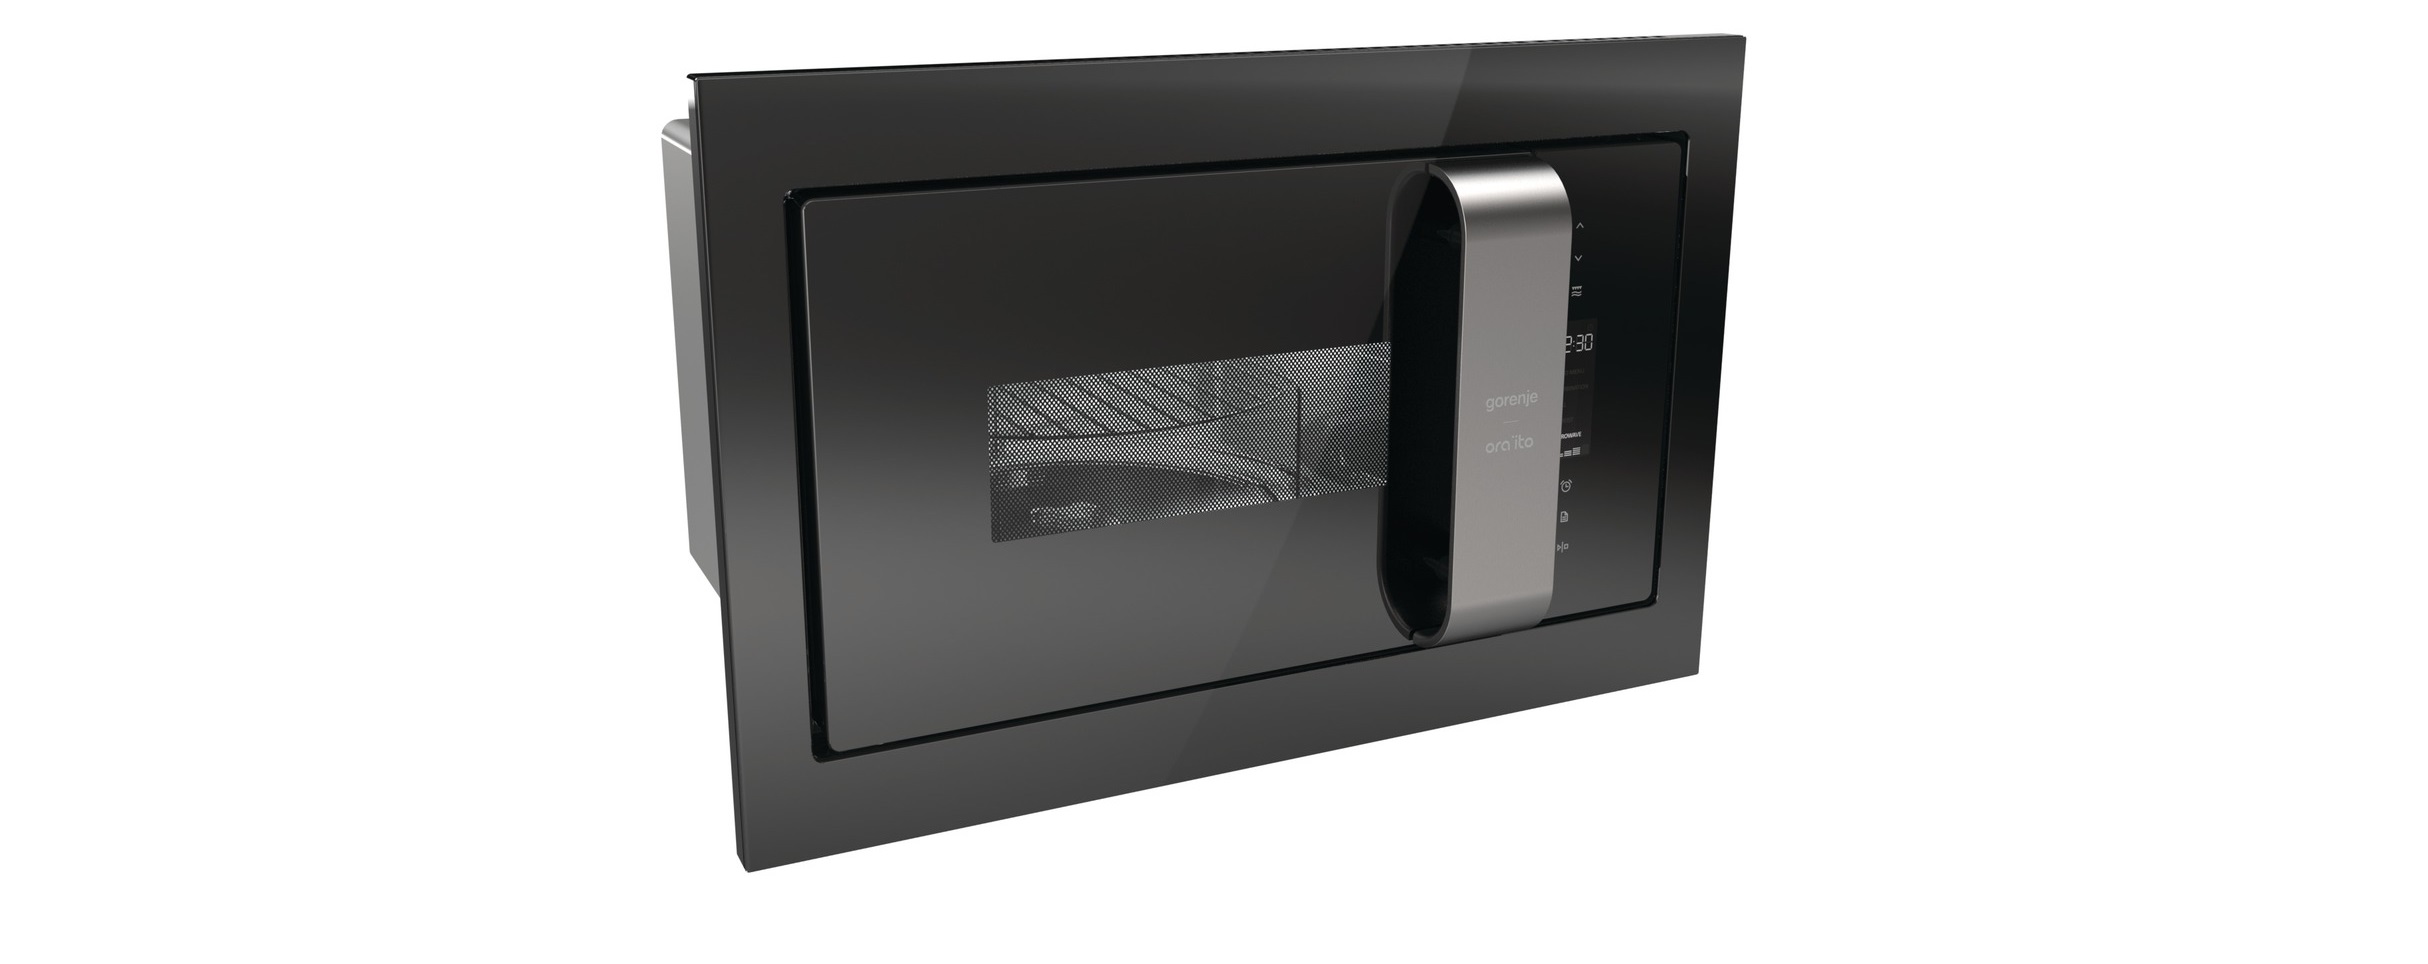 Gorenje Built-In Electric Digital Microwave With Grill, 23 Liters, 60 cm,  Black - BM235ORAB